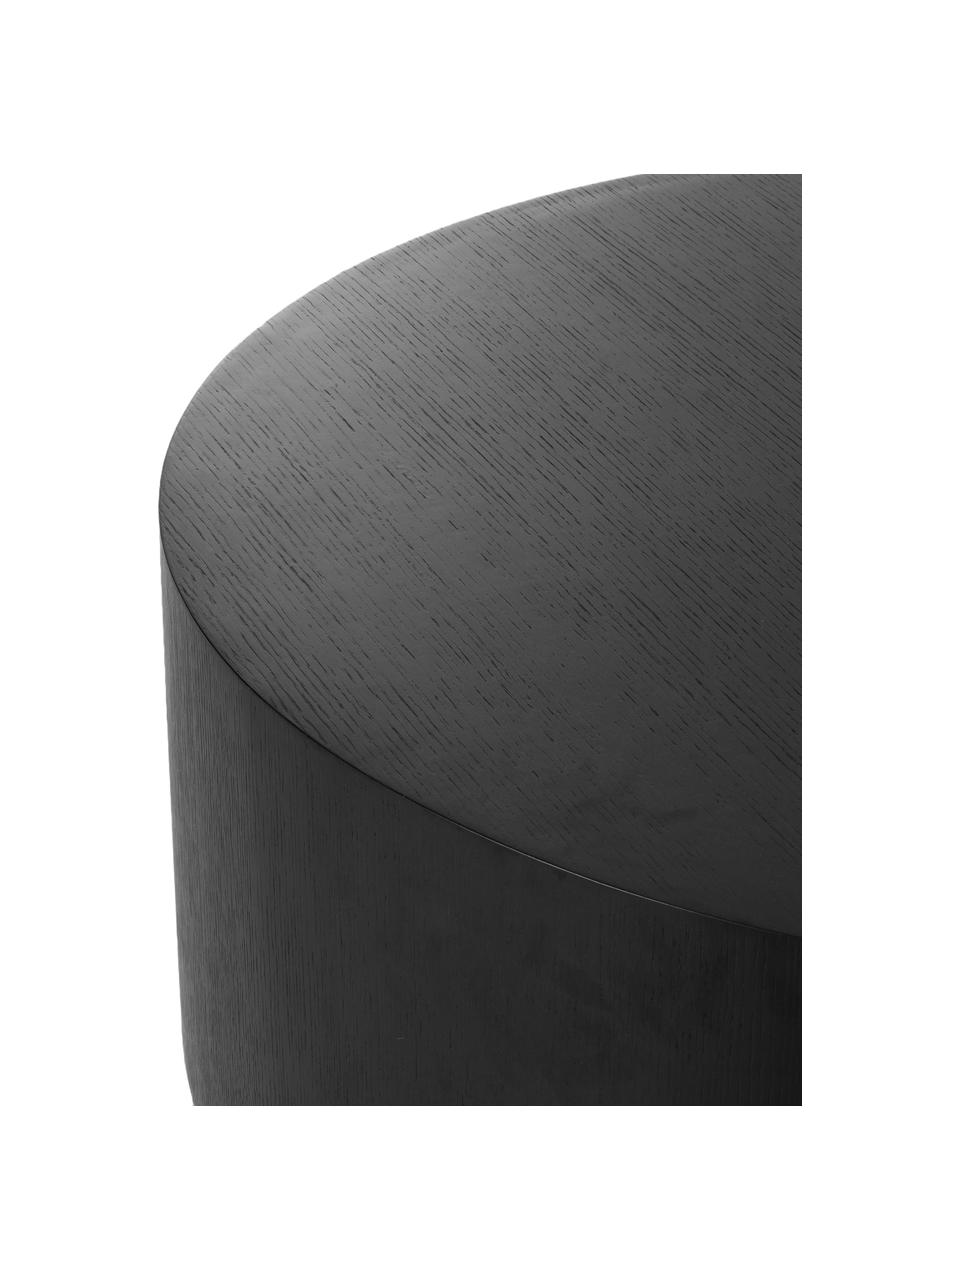 Mesa de centro redonda Clarice, Estructura: tablero de fibras de dens, Negro, dorado, Ø 60 cm